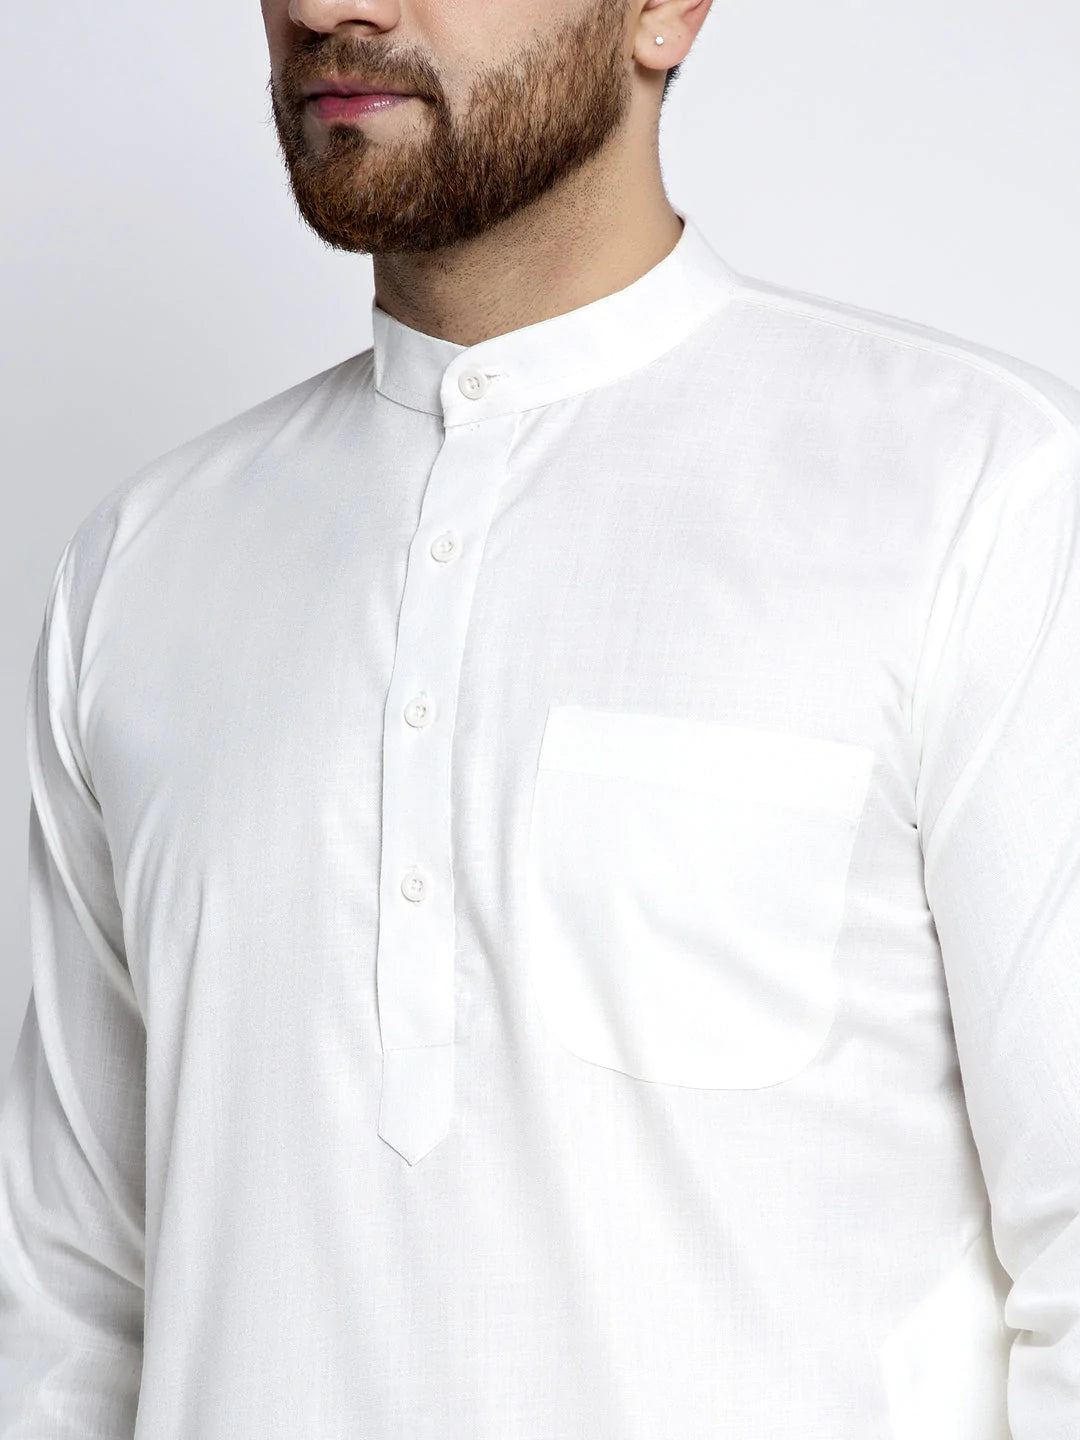 Jompers Men's Solid White Cotton Kurta Payjama with Solid Charcoal Waistcoat ( JOKPWC OW-F 4021 Charcoal )